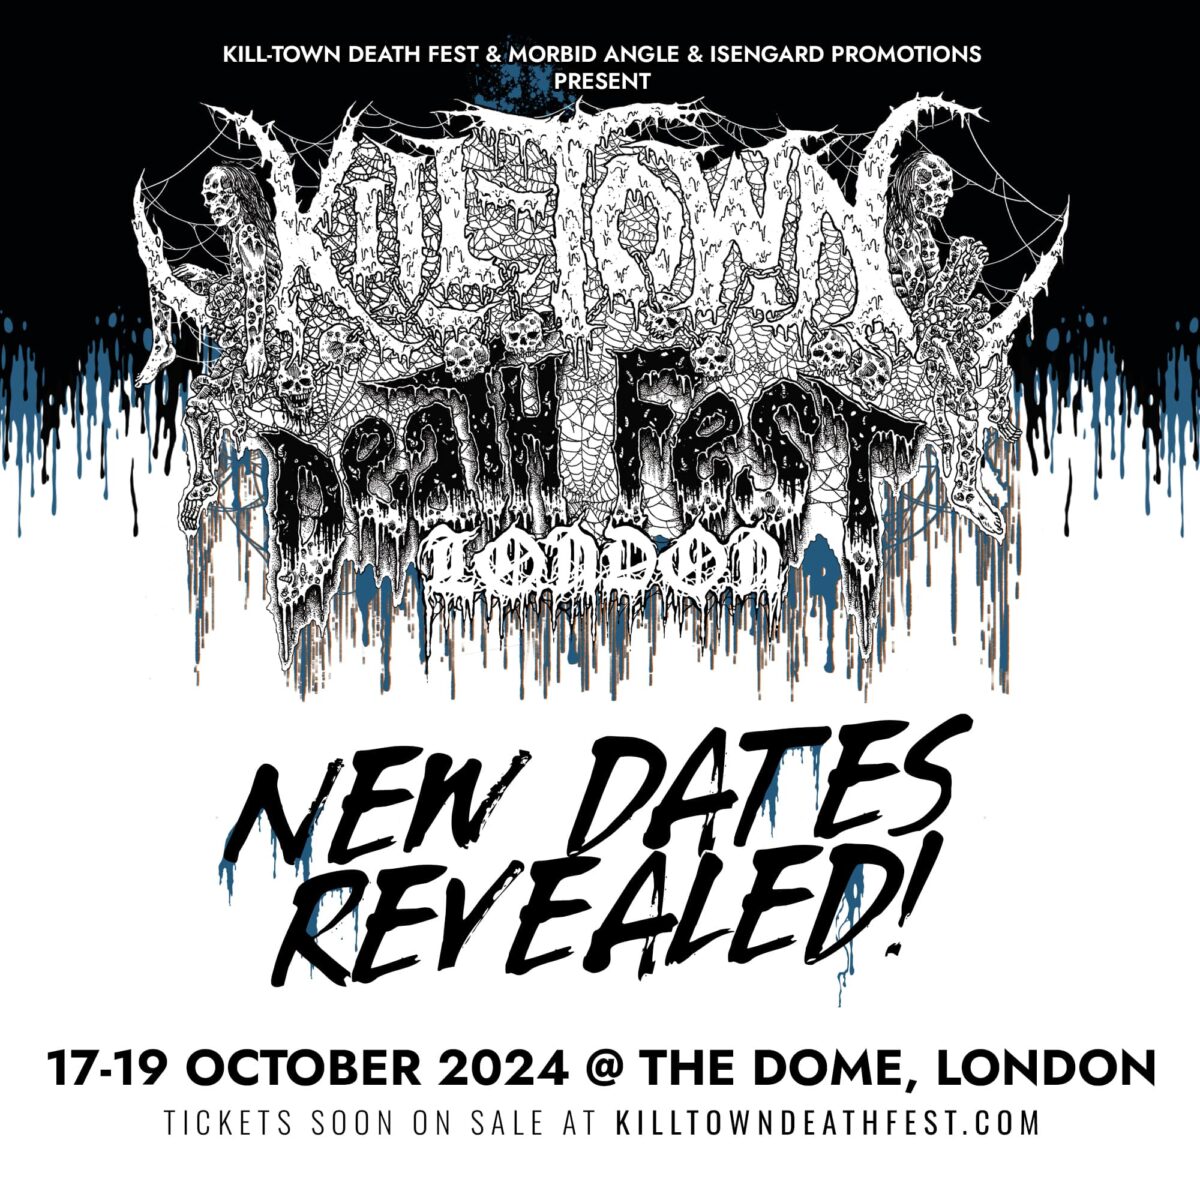 Announcing Kill-town Death Fest London